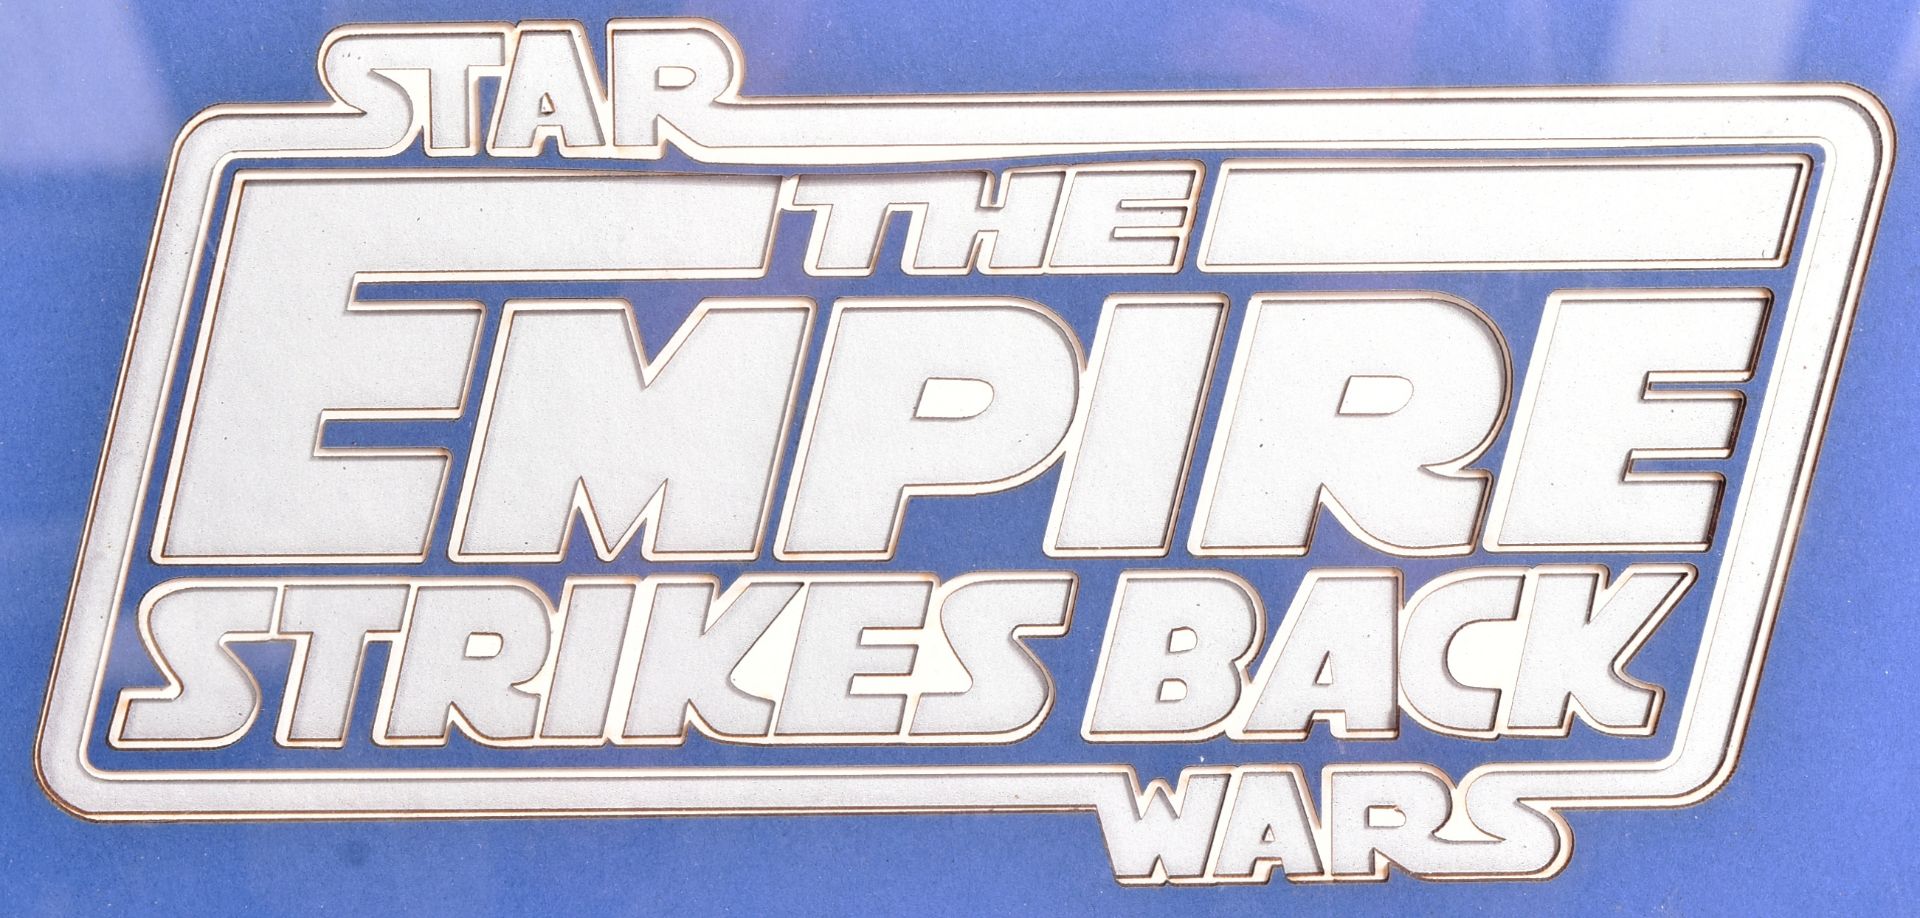 STAR WARS - THE EMPIRE STRIKES BACK (1980) - ORIGINAL CALL SHEET - Image 5 of 5